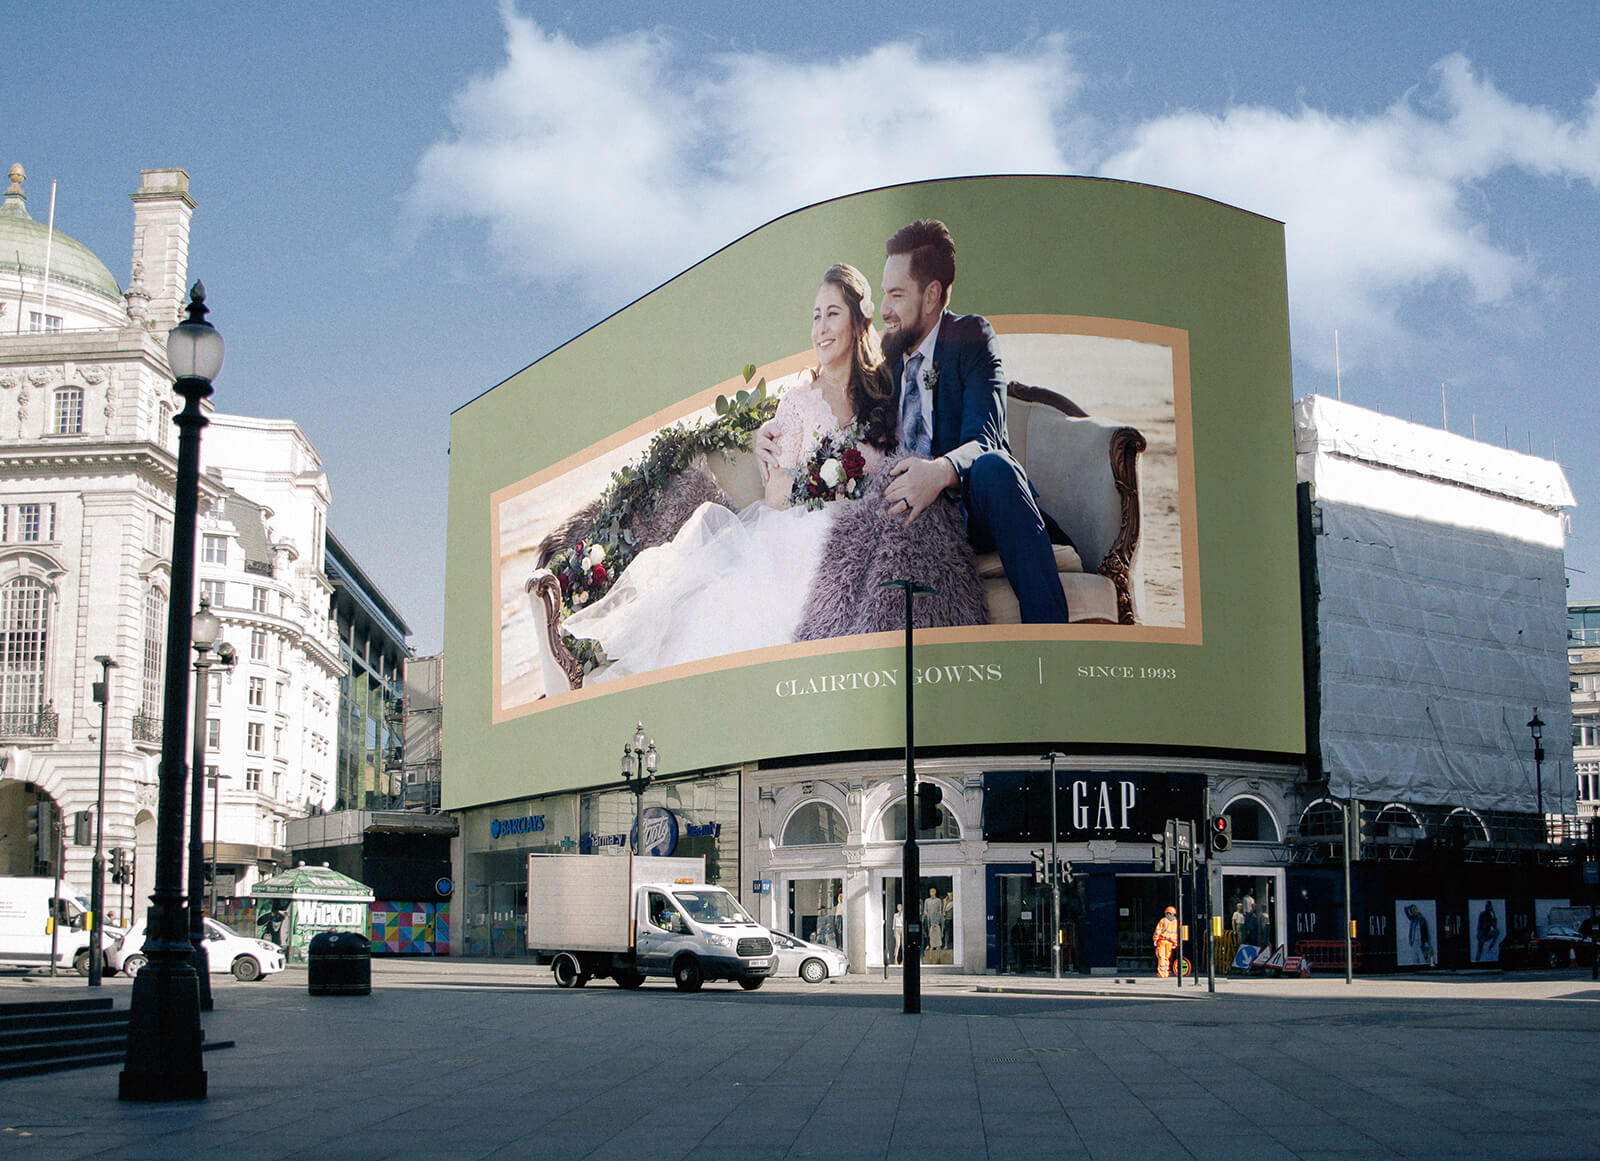 Free-Leicester-Square-London-UK-Billboard-Mockup-PSD